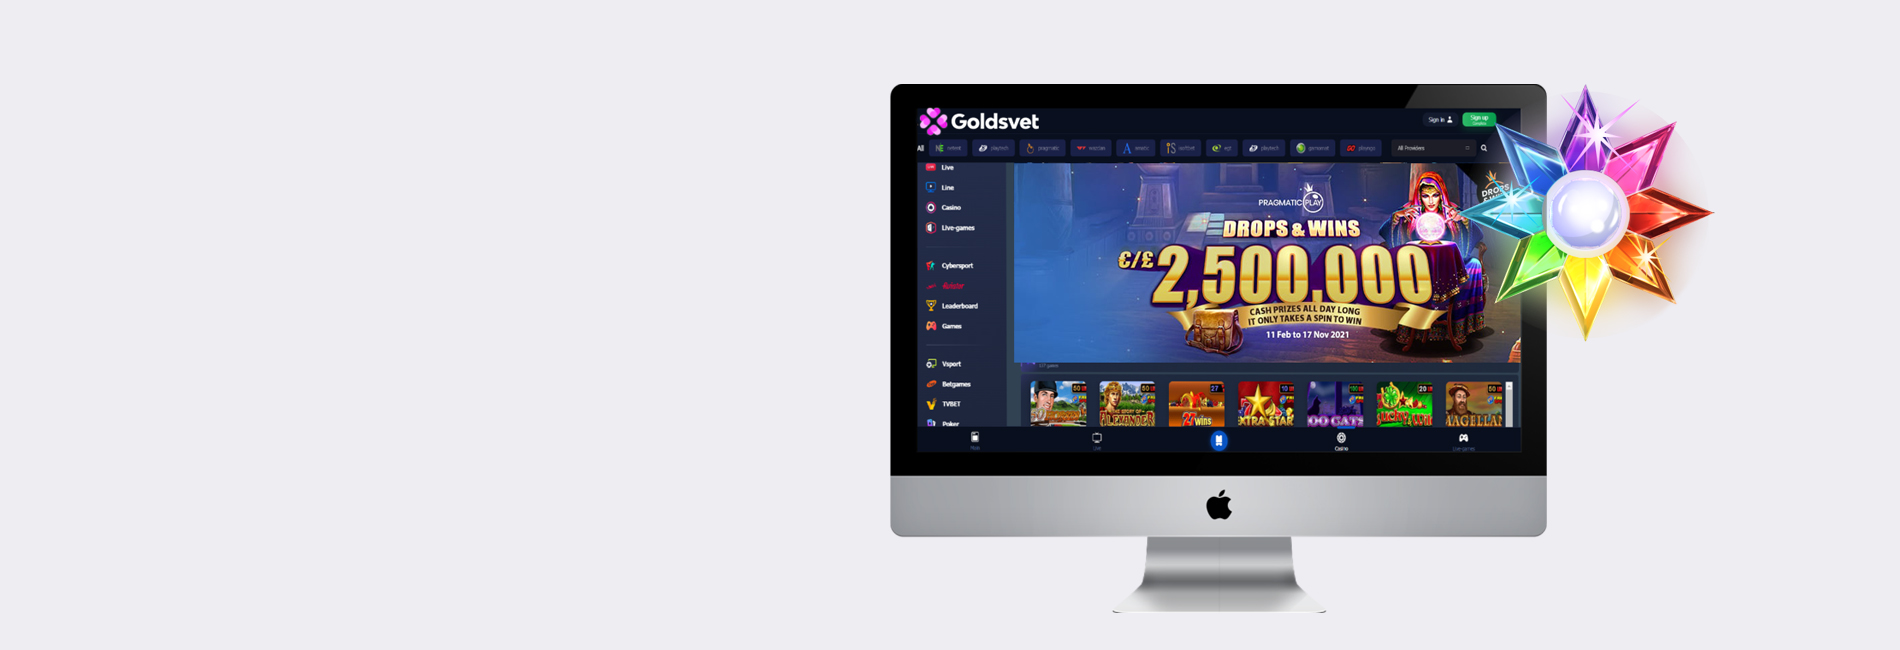 goldsvet casino software online